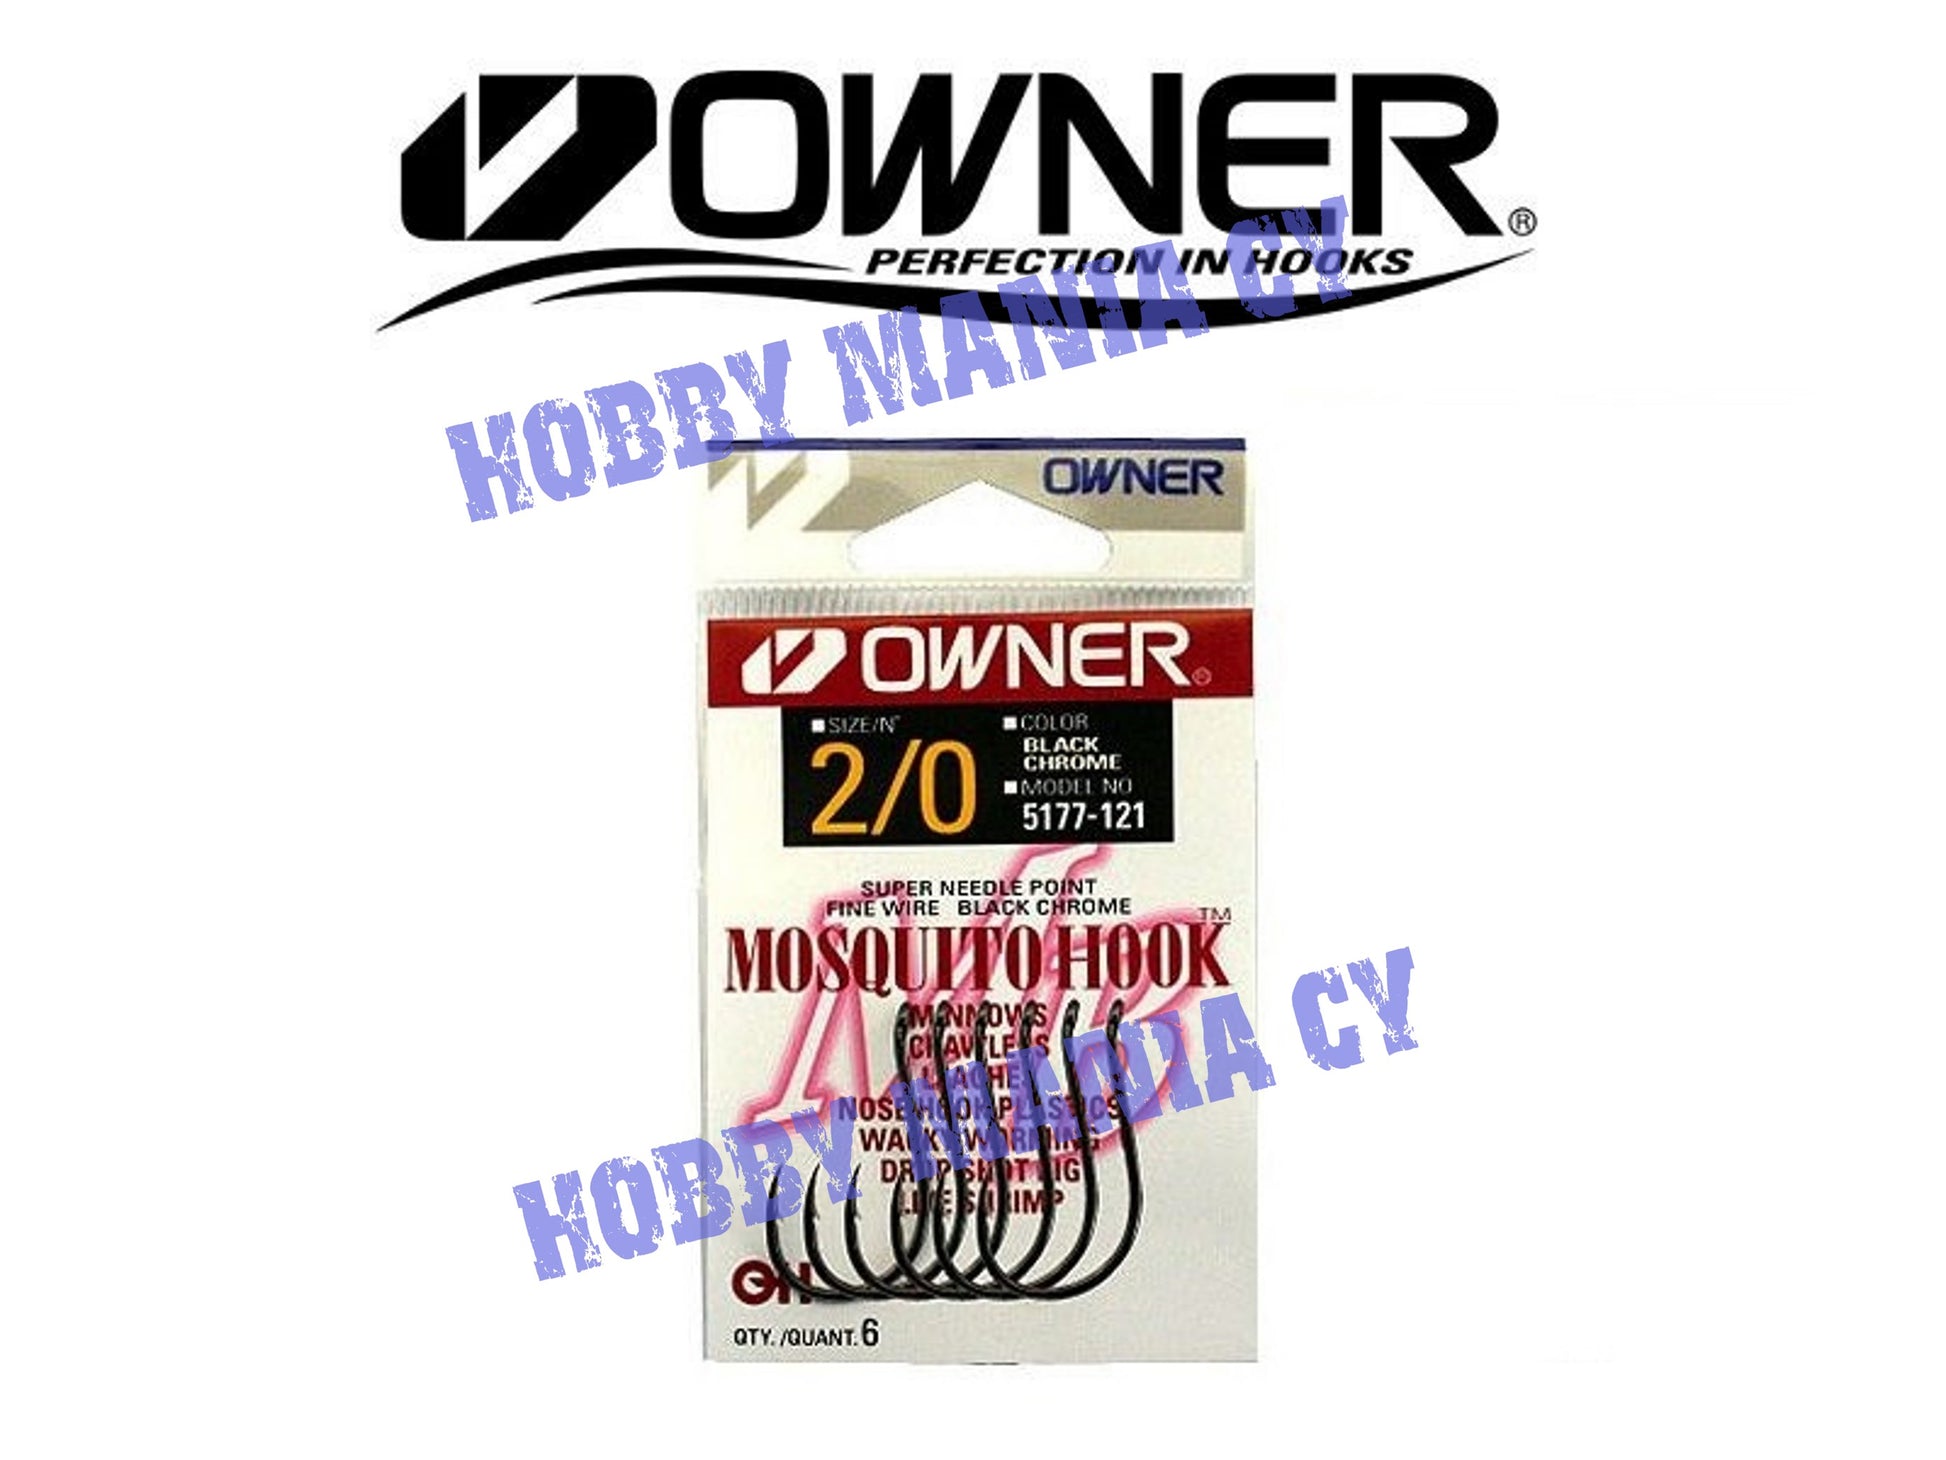 Owner 5177 Mosquito Hooks – Hobbymania CY